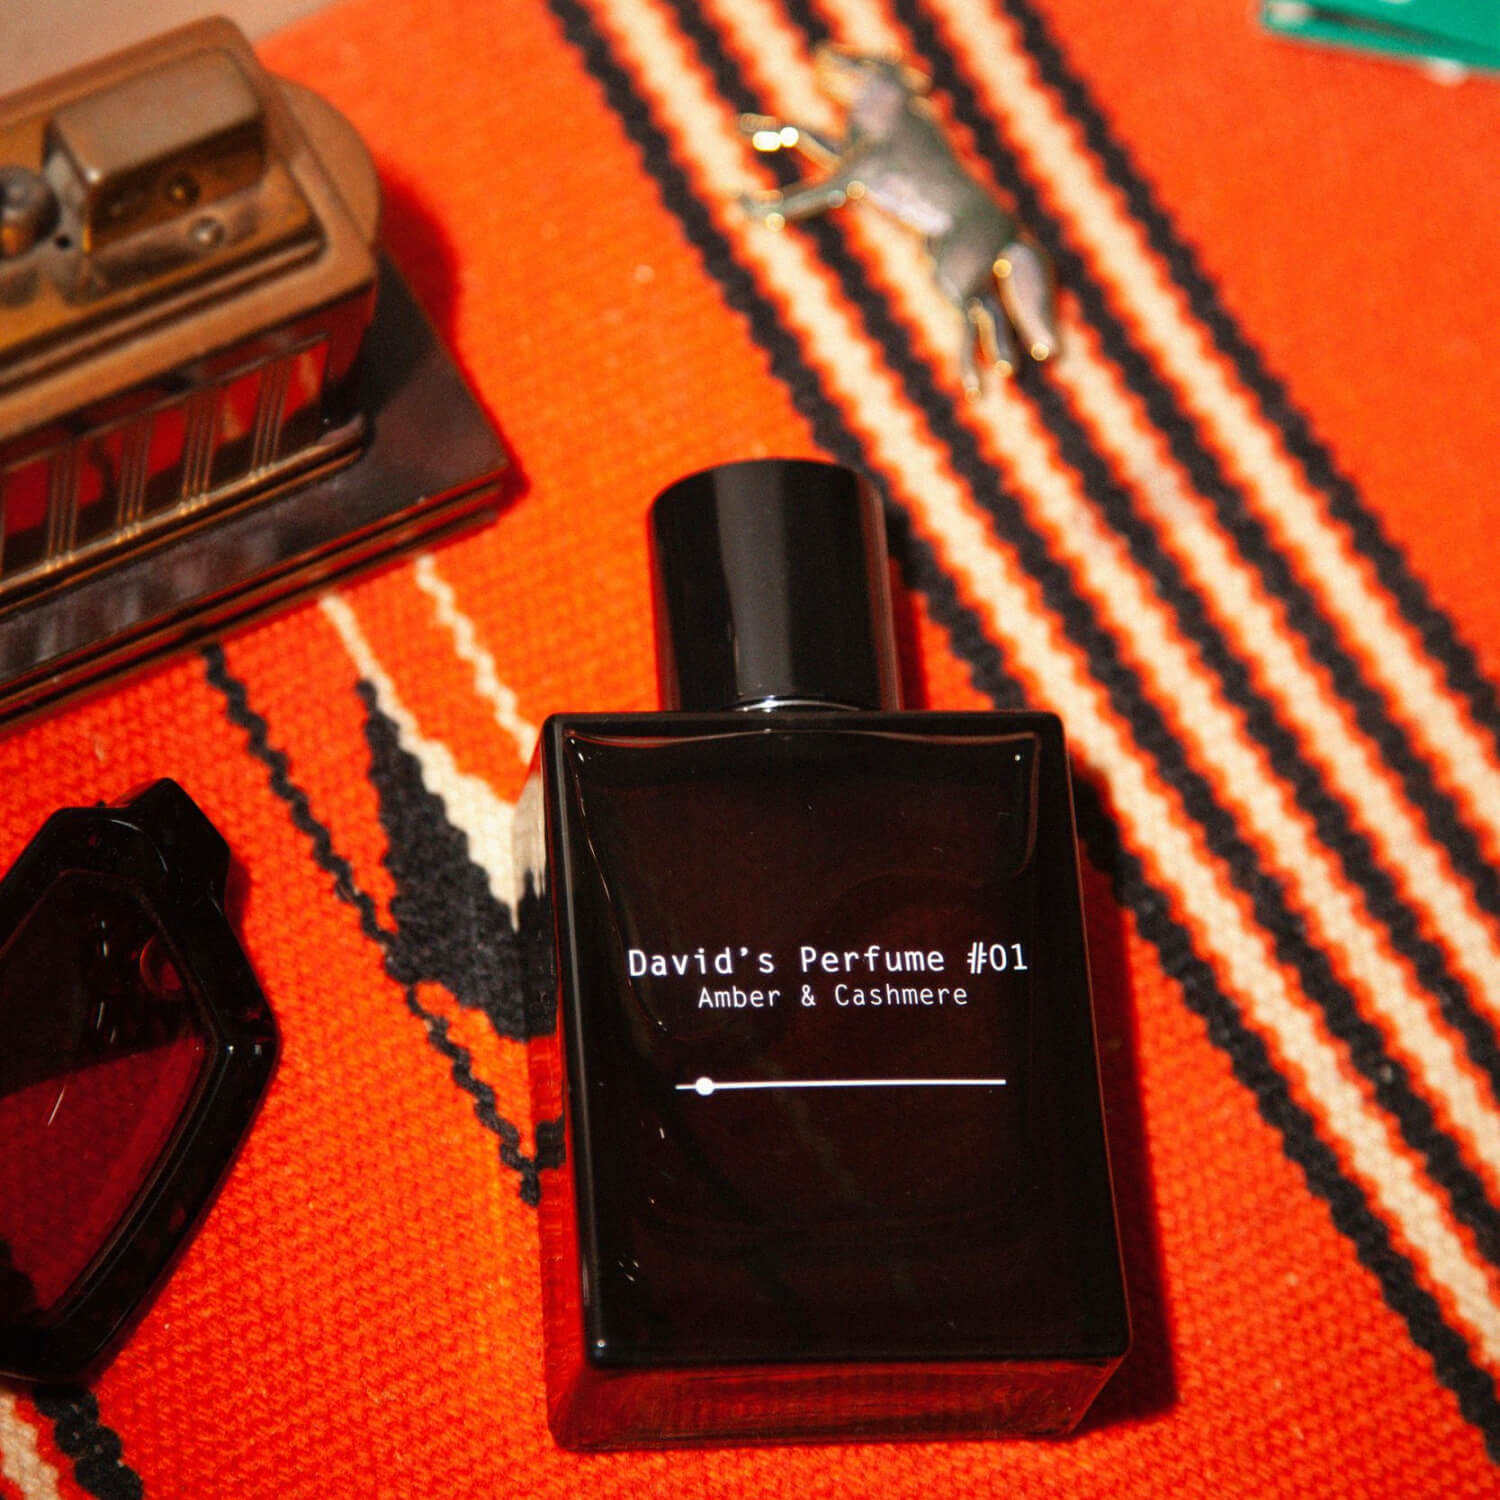 David's Perfume by David Dobrik #01 Amber & Cashmere for $16.95 per ...